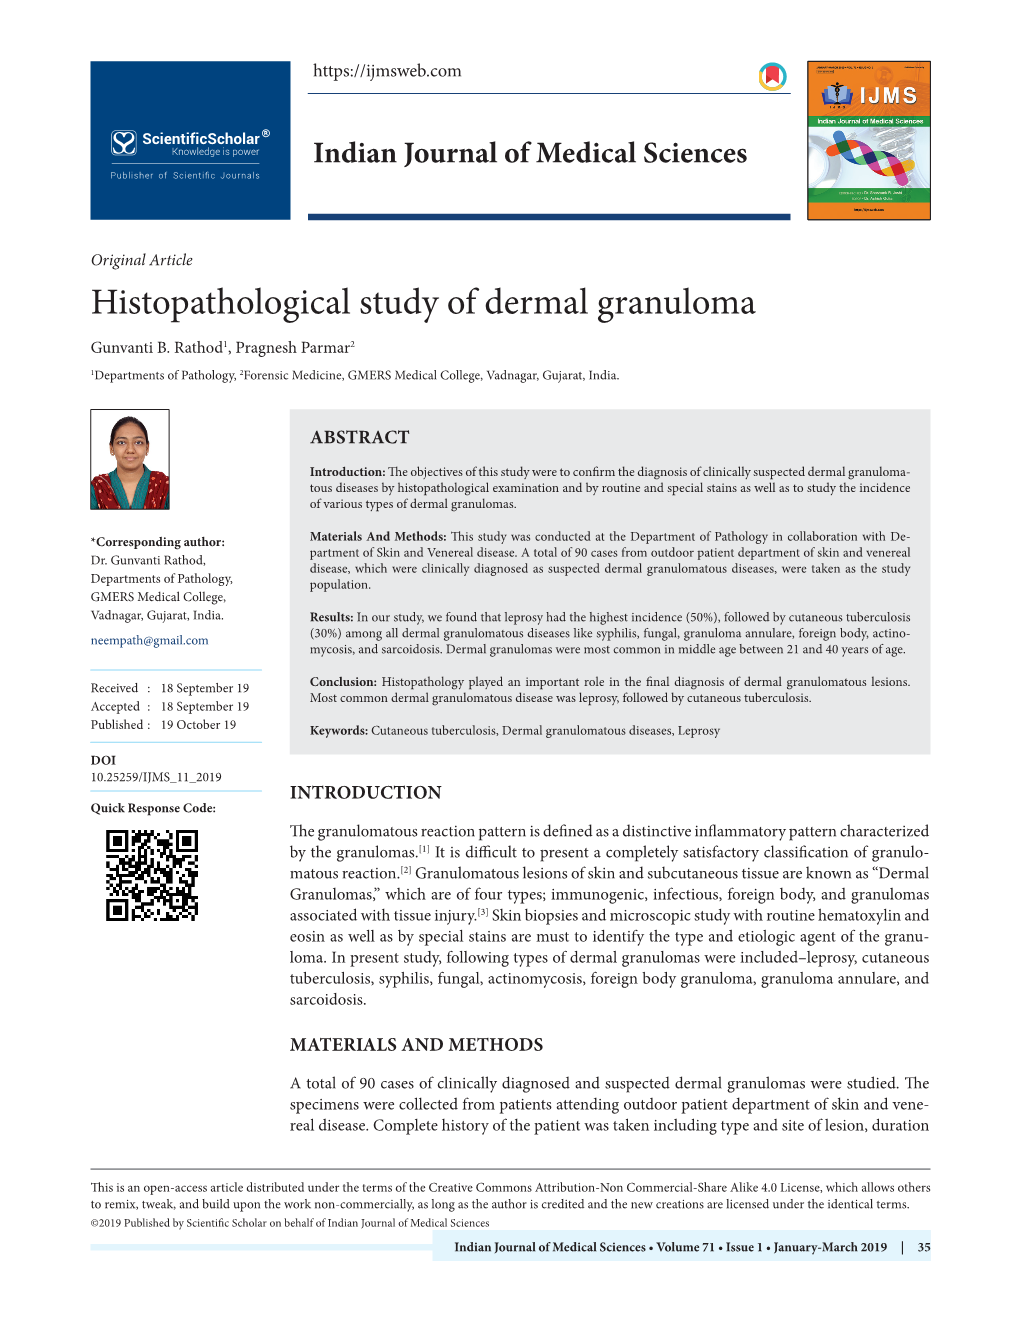 Histopathological Study of Dermal Granuloma Gunvanti B